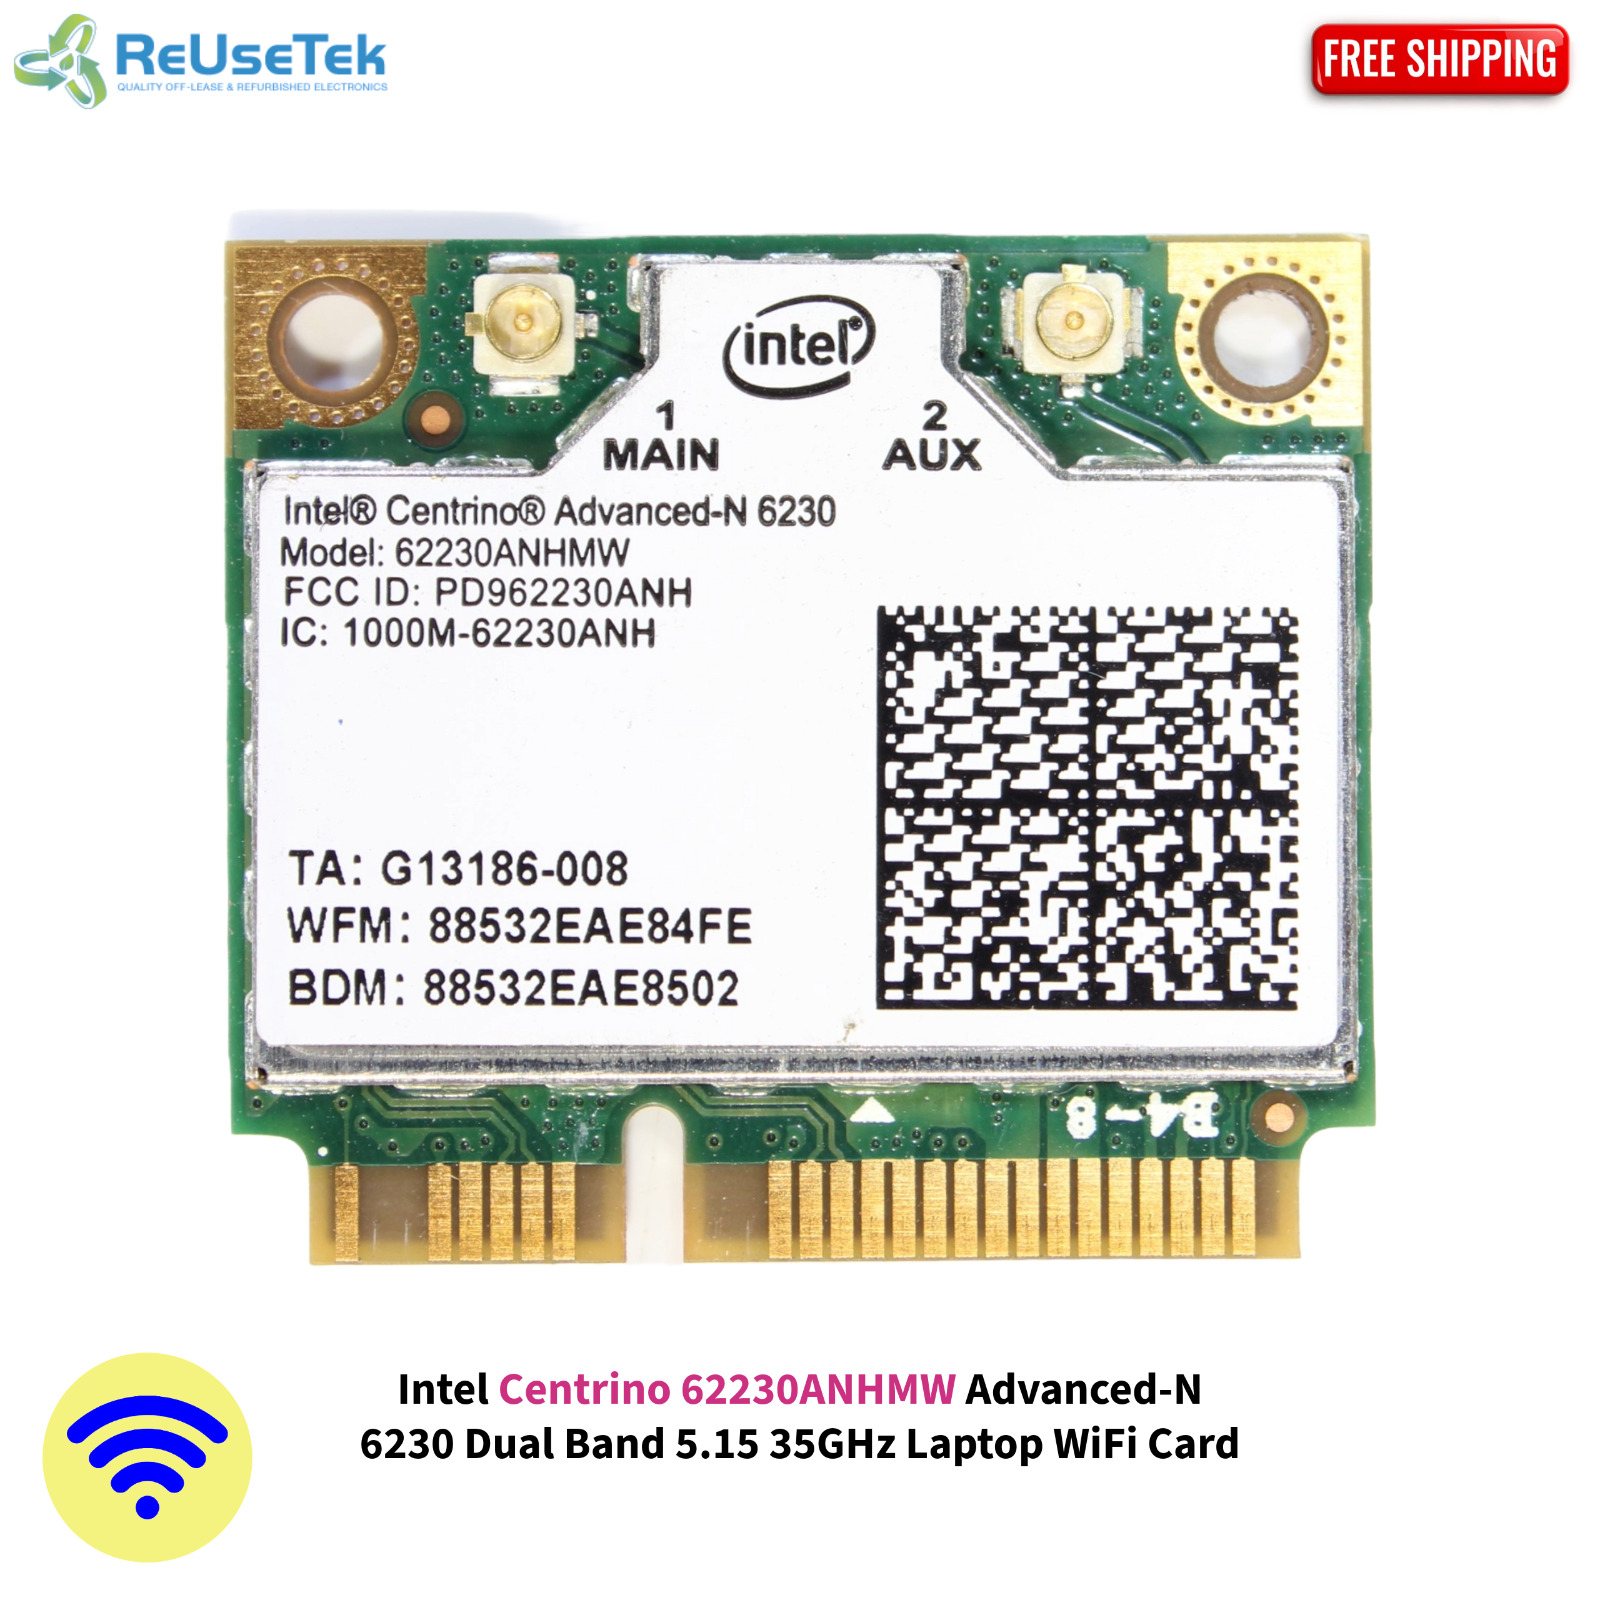 Intel Centrino 62230ANHMW Advanced-N 6230 Dual Band 5.15 35GHz Laptop WiFi Card